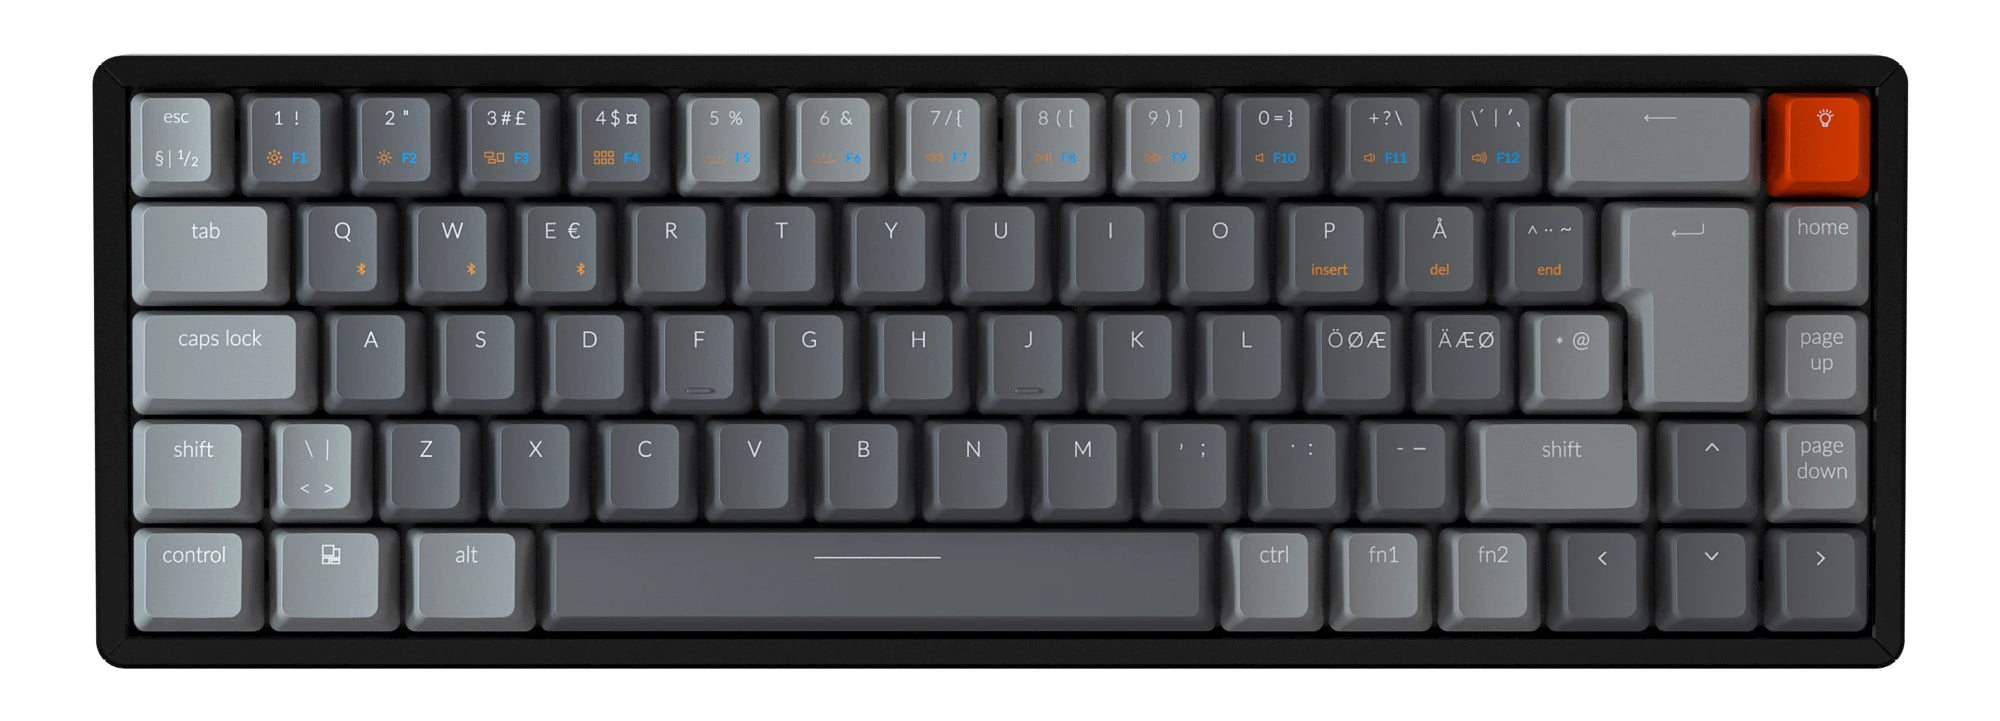 macally bluetooth keyboard function key light on